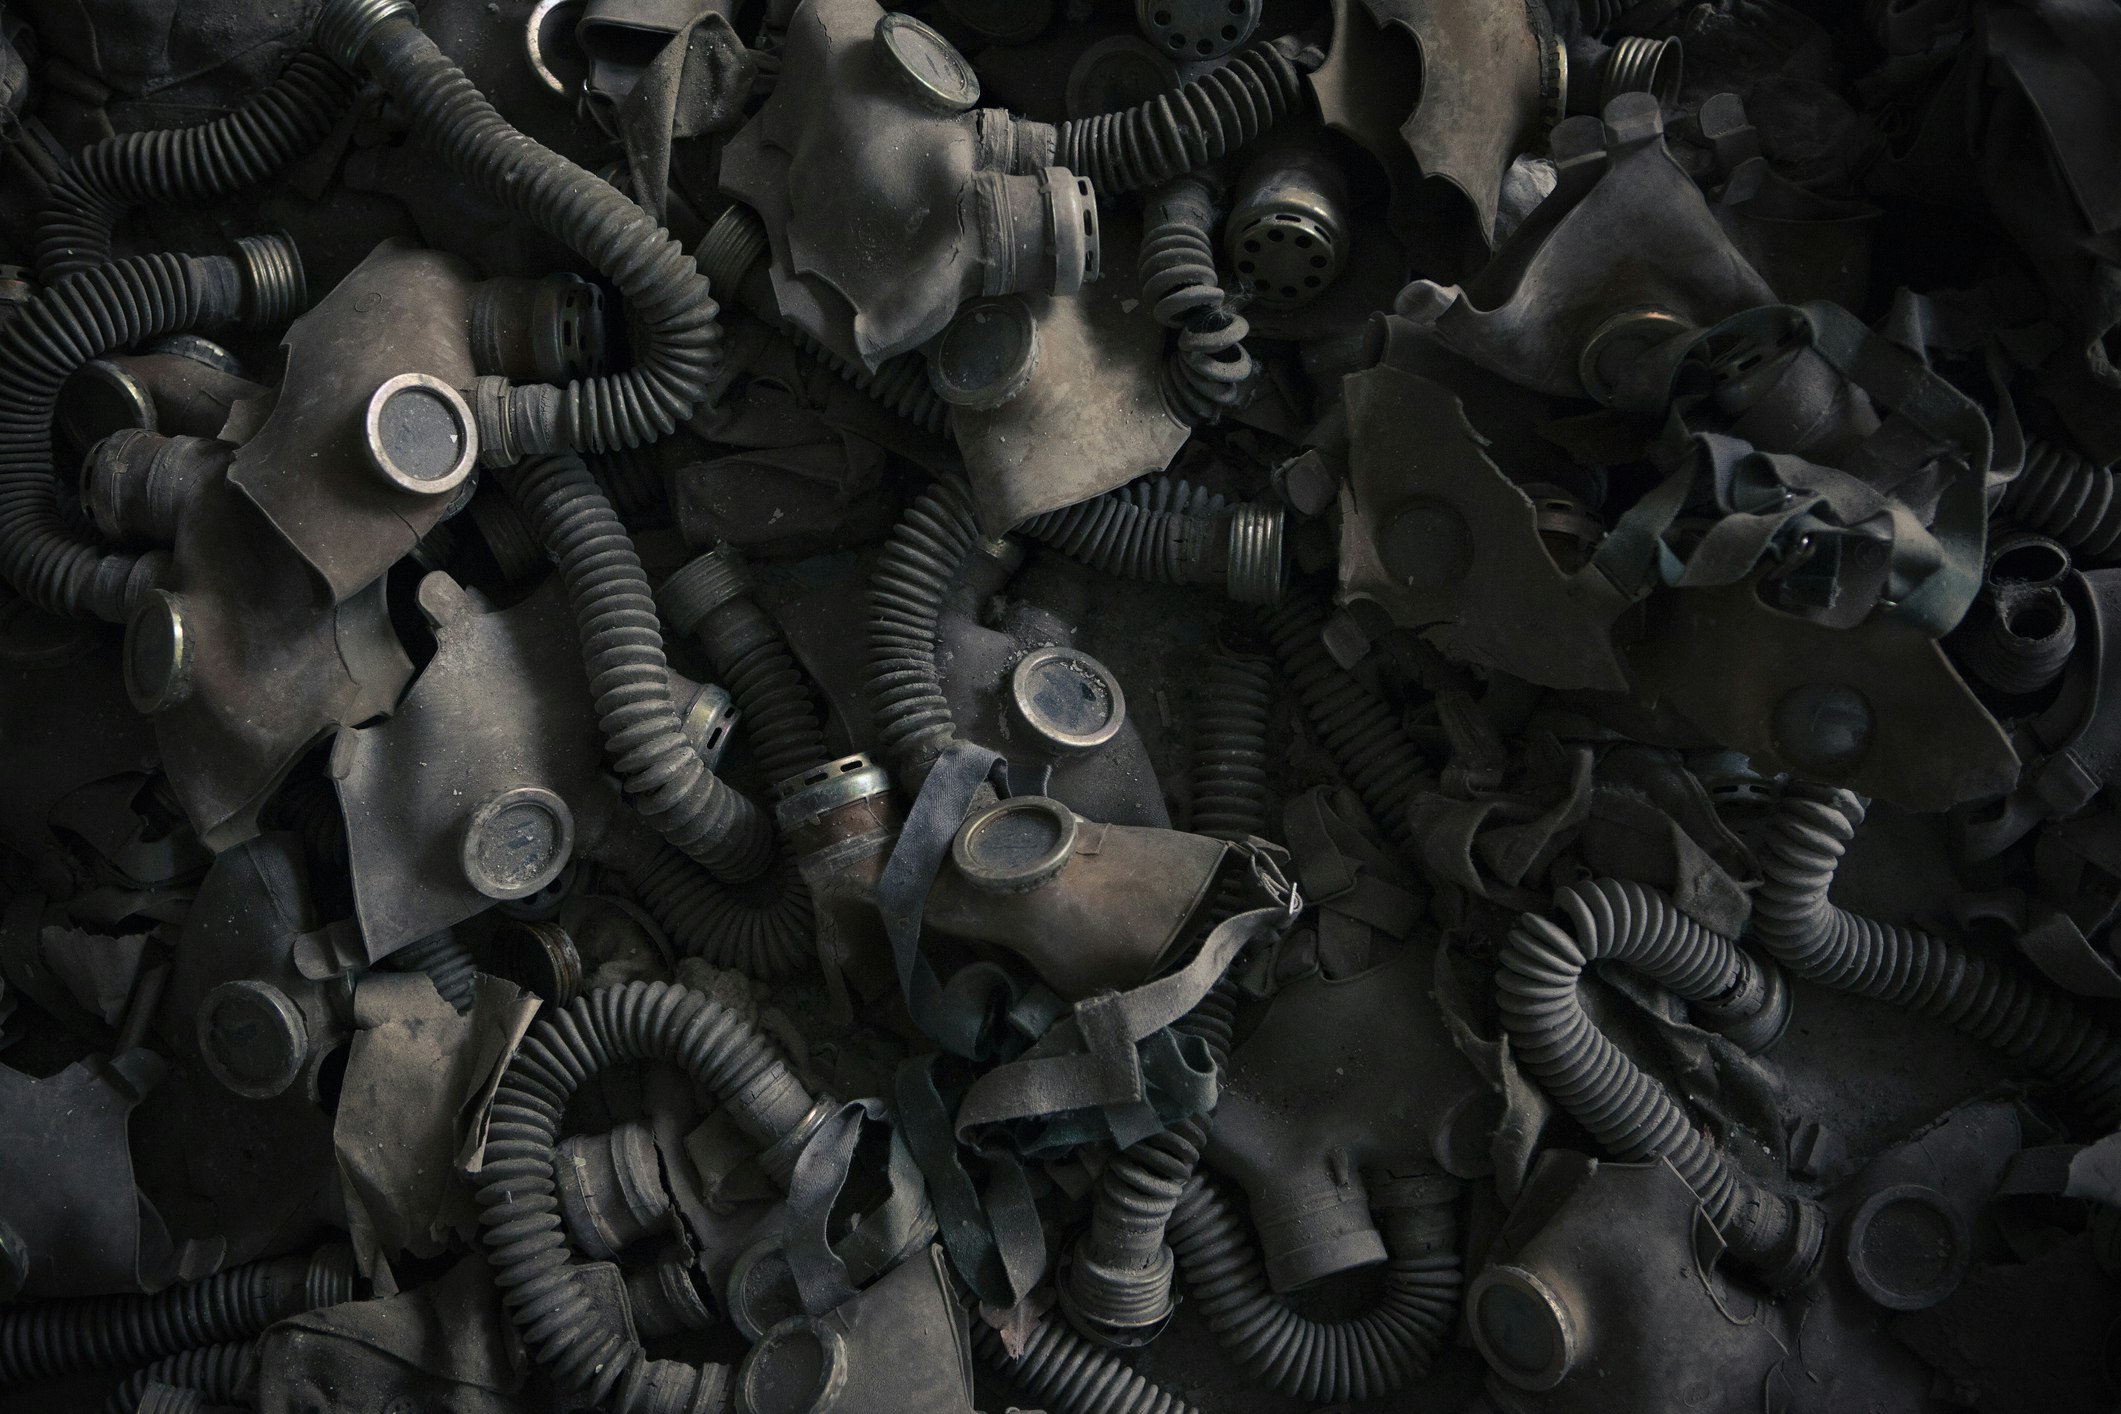 A pile of black gas masks lying in Pripyat Ukraine